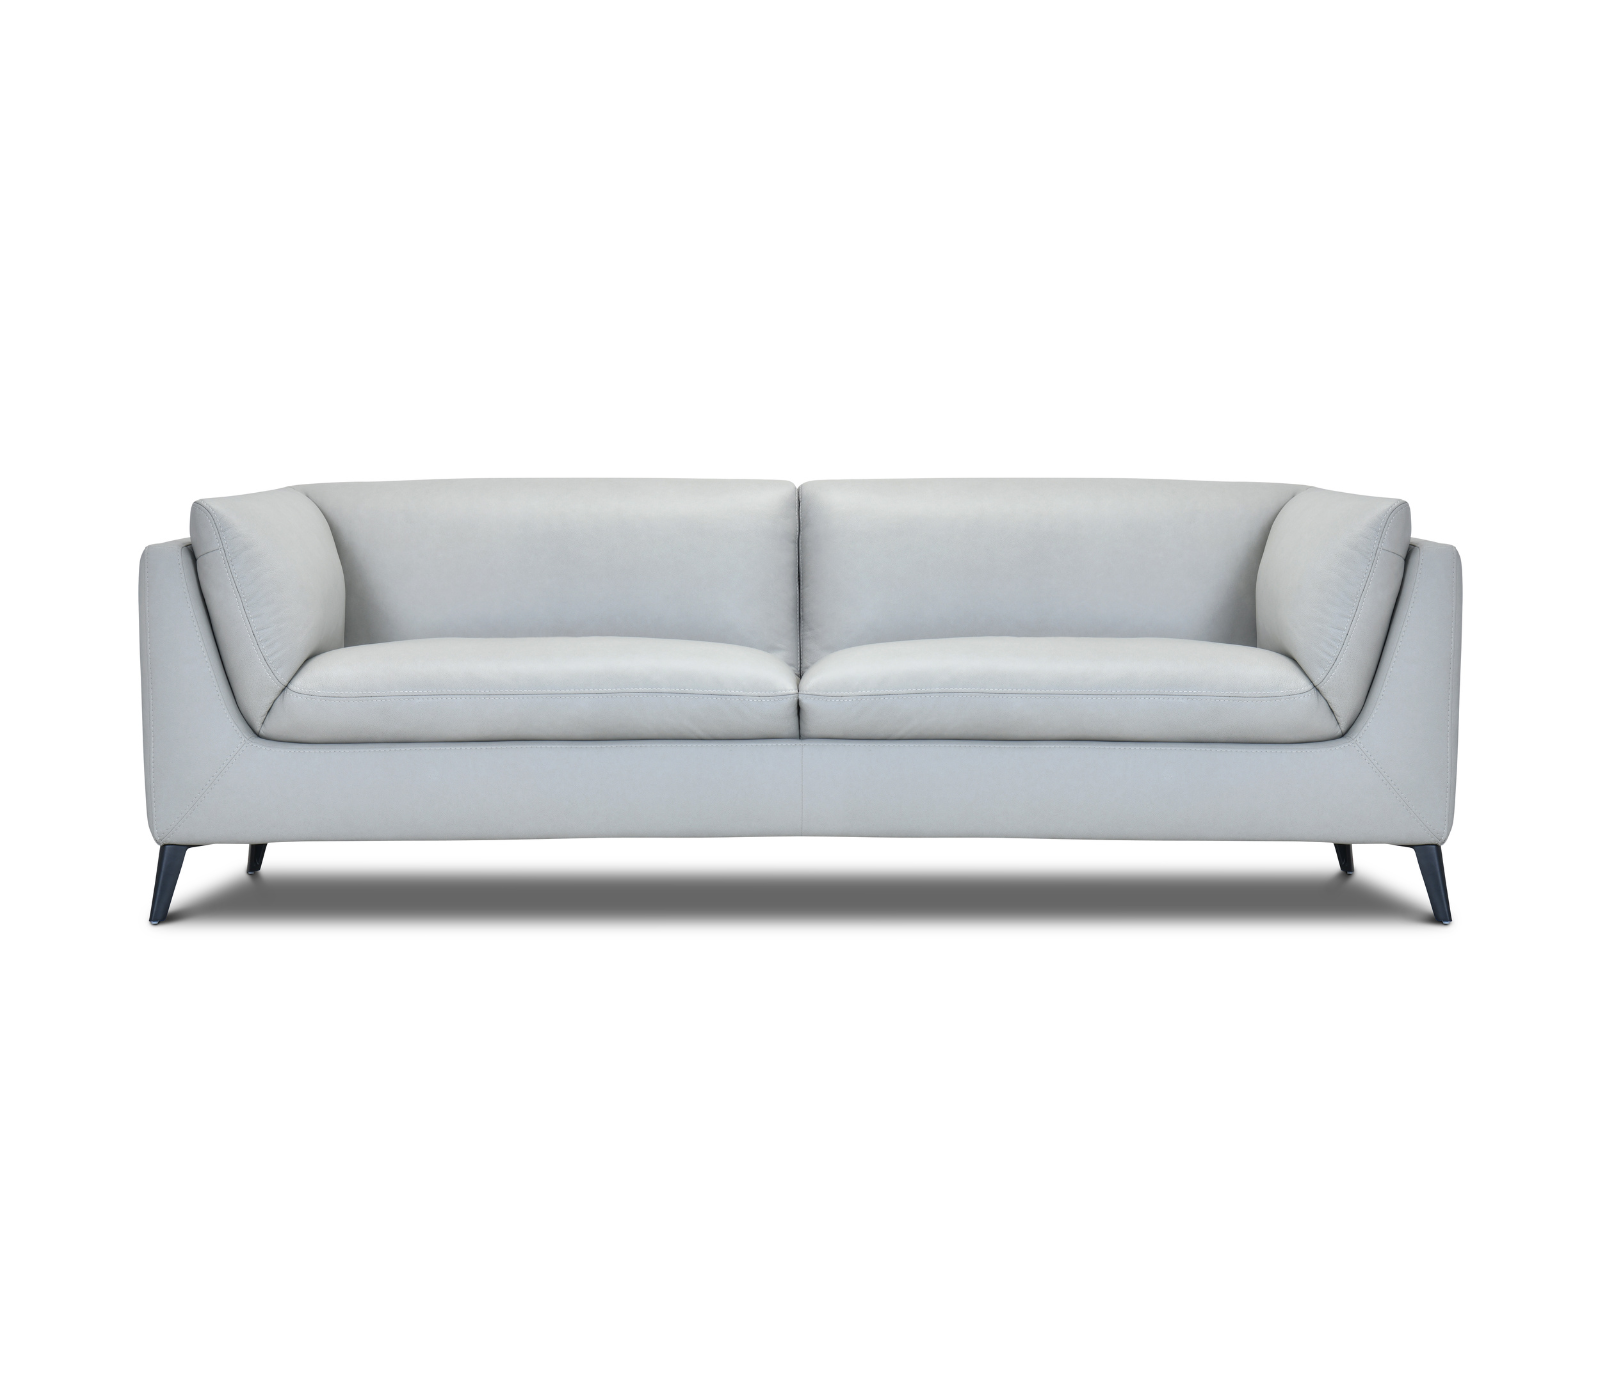 Tampa Sofa - Dove Grey Leather